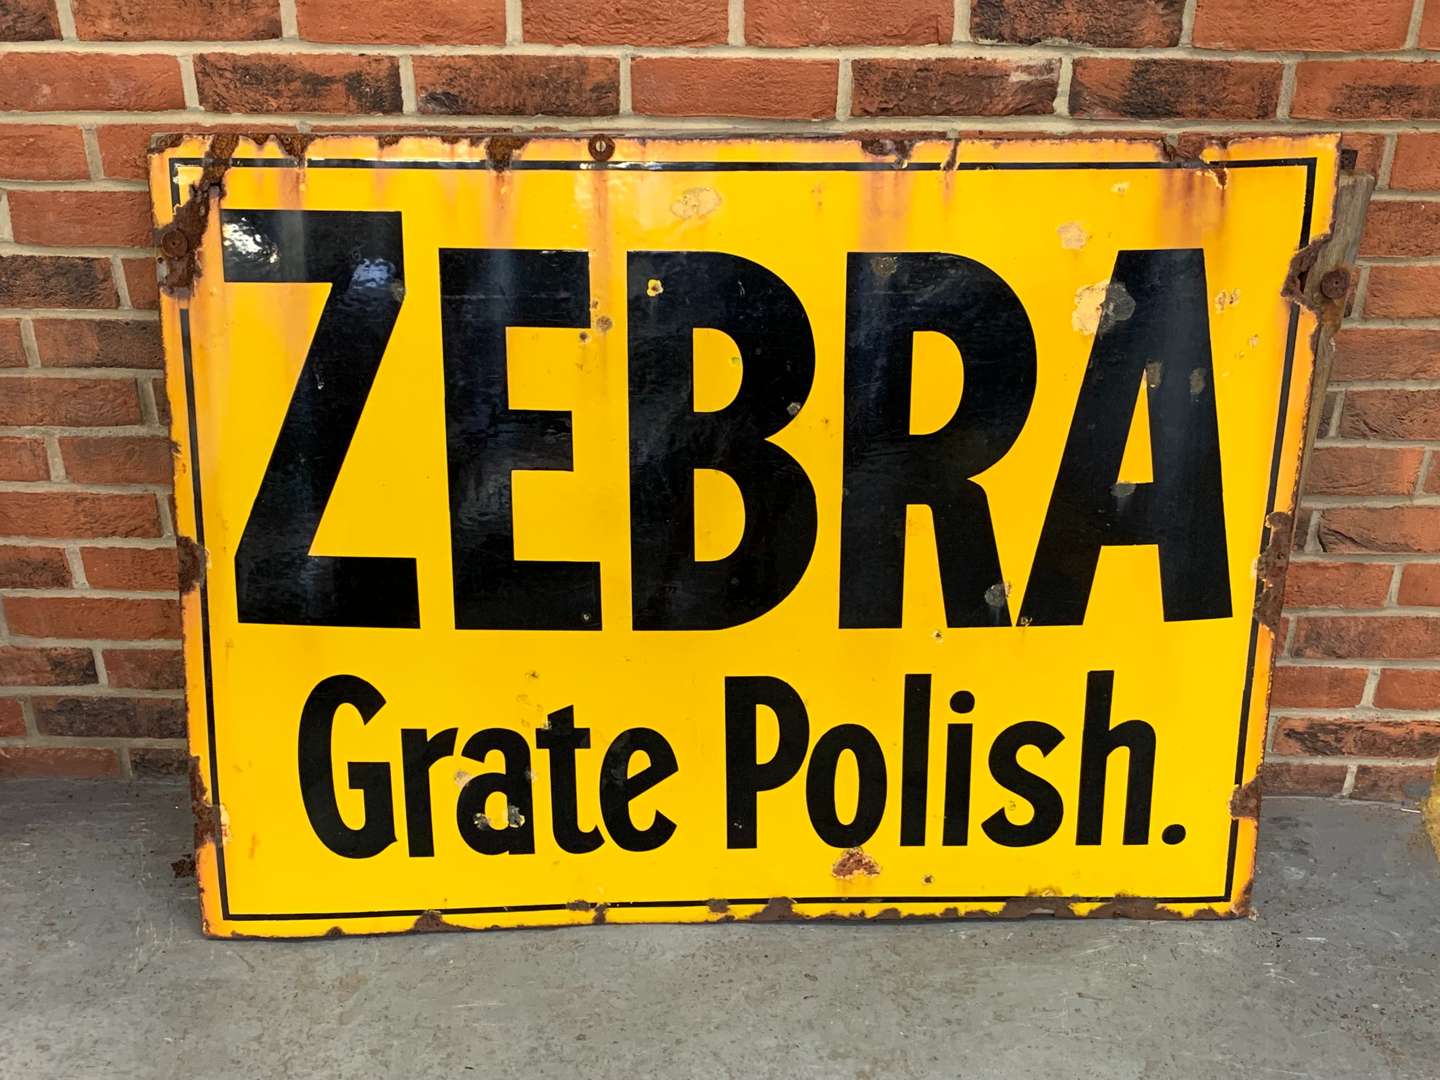 <p>Zebra Grate Polish Enamel Sign</p>